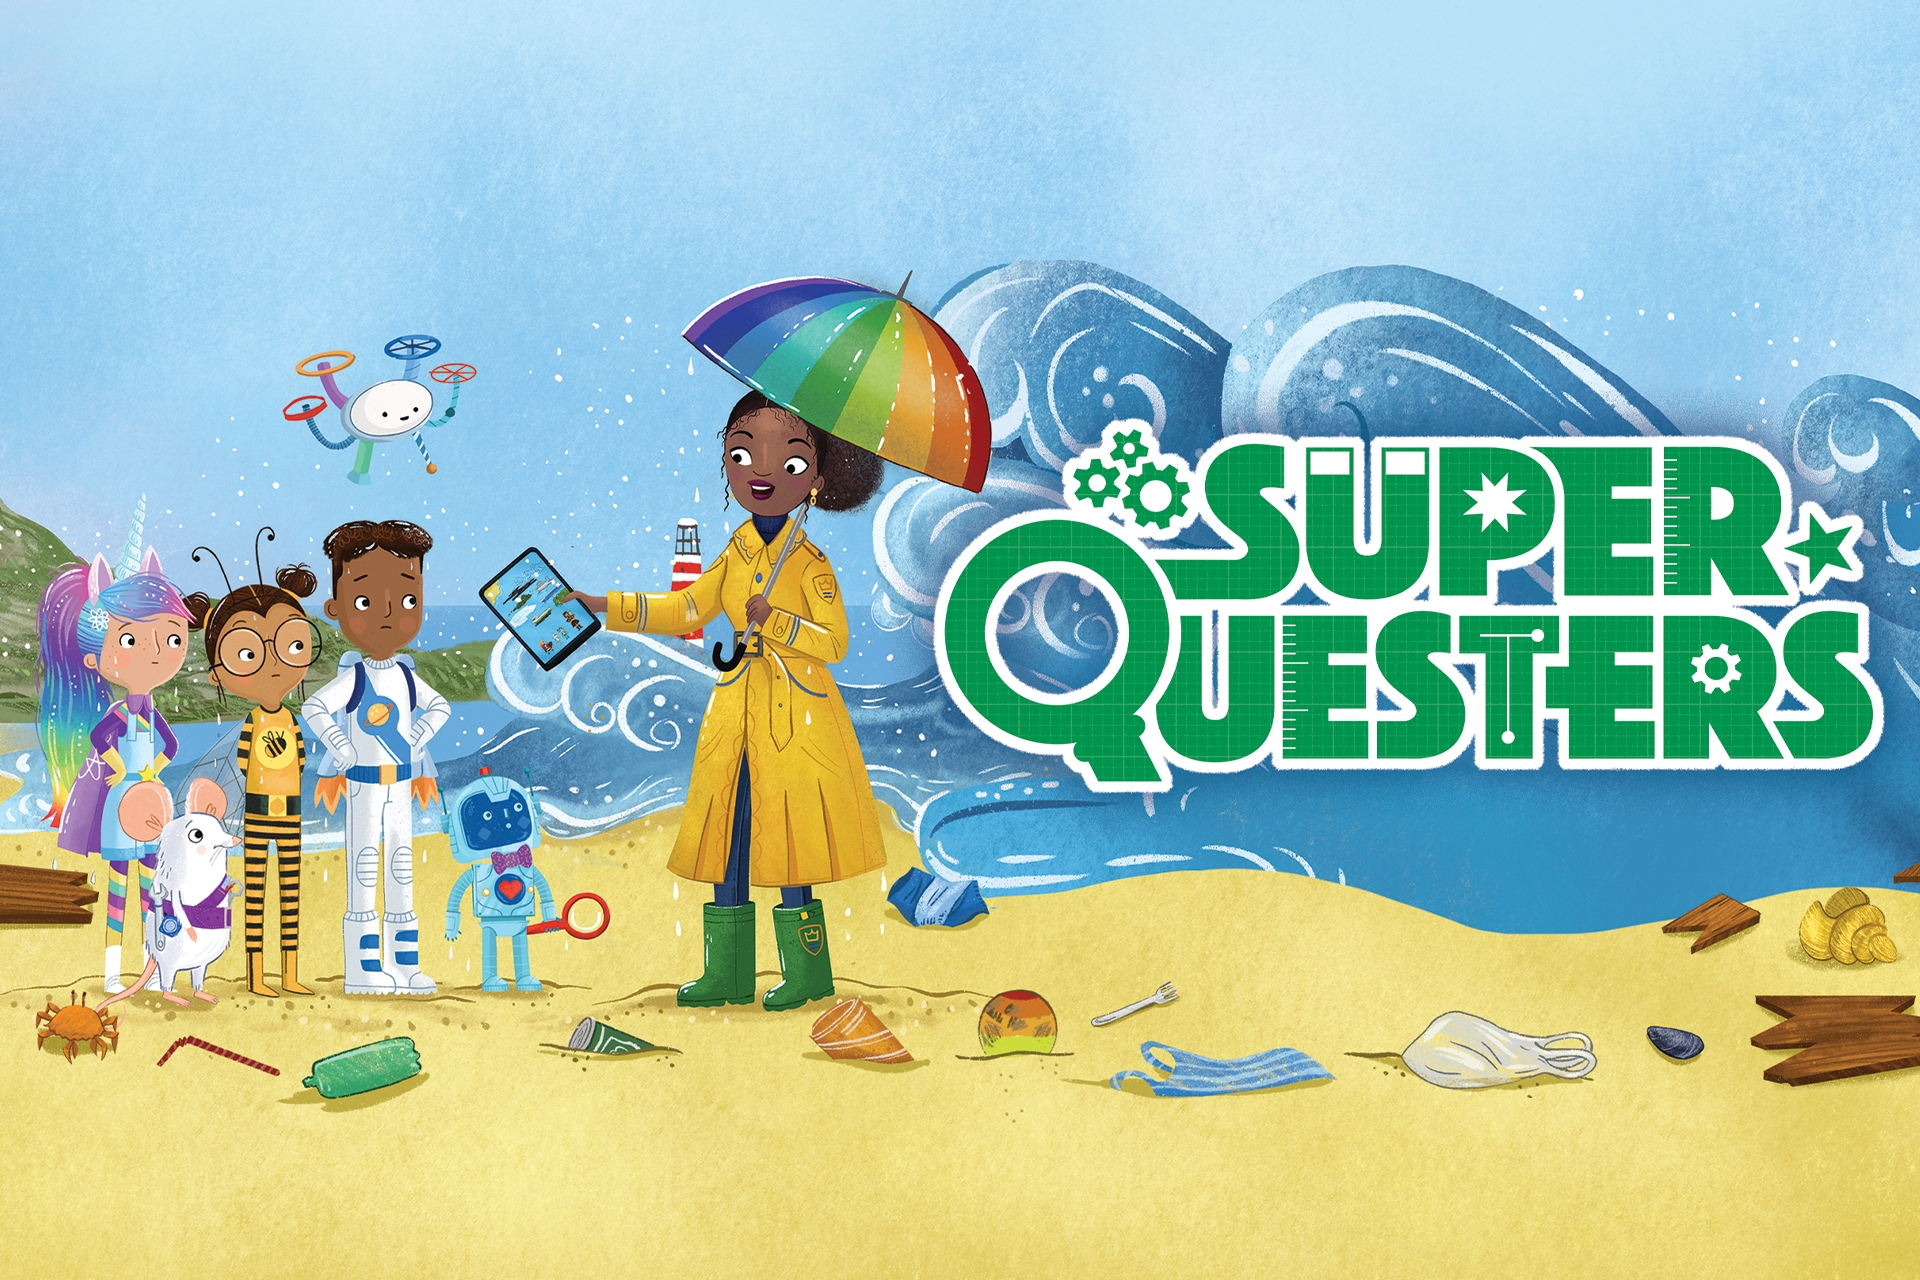 SuperQuesters - a fun, imaginative new adventure series to develop STEM skills in young children